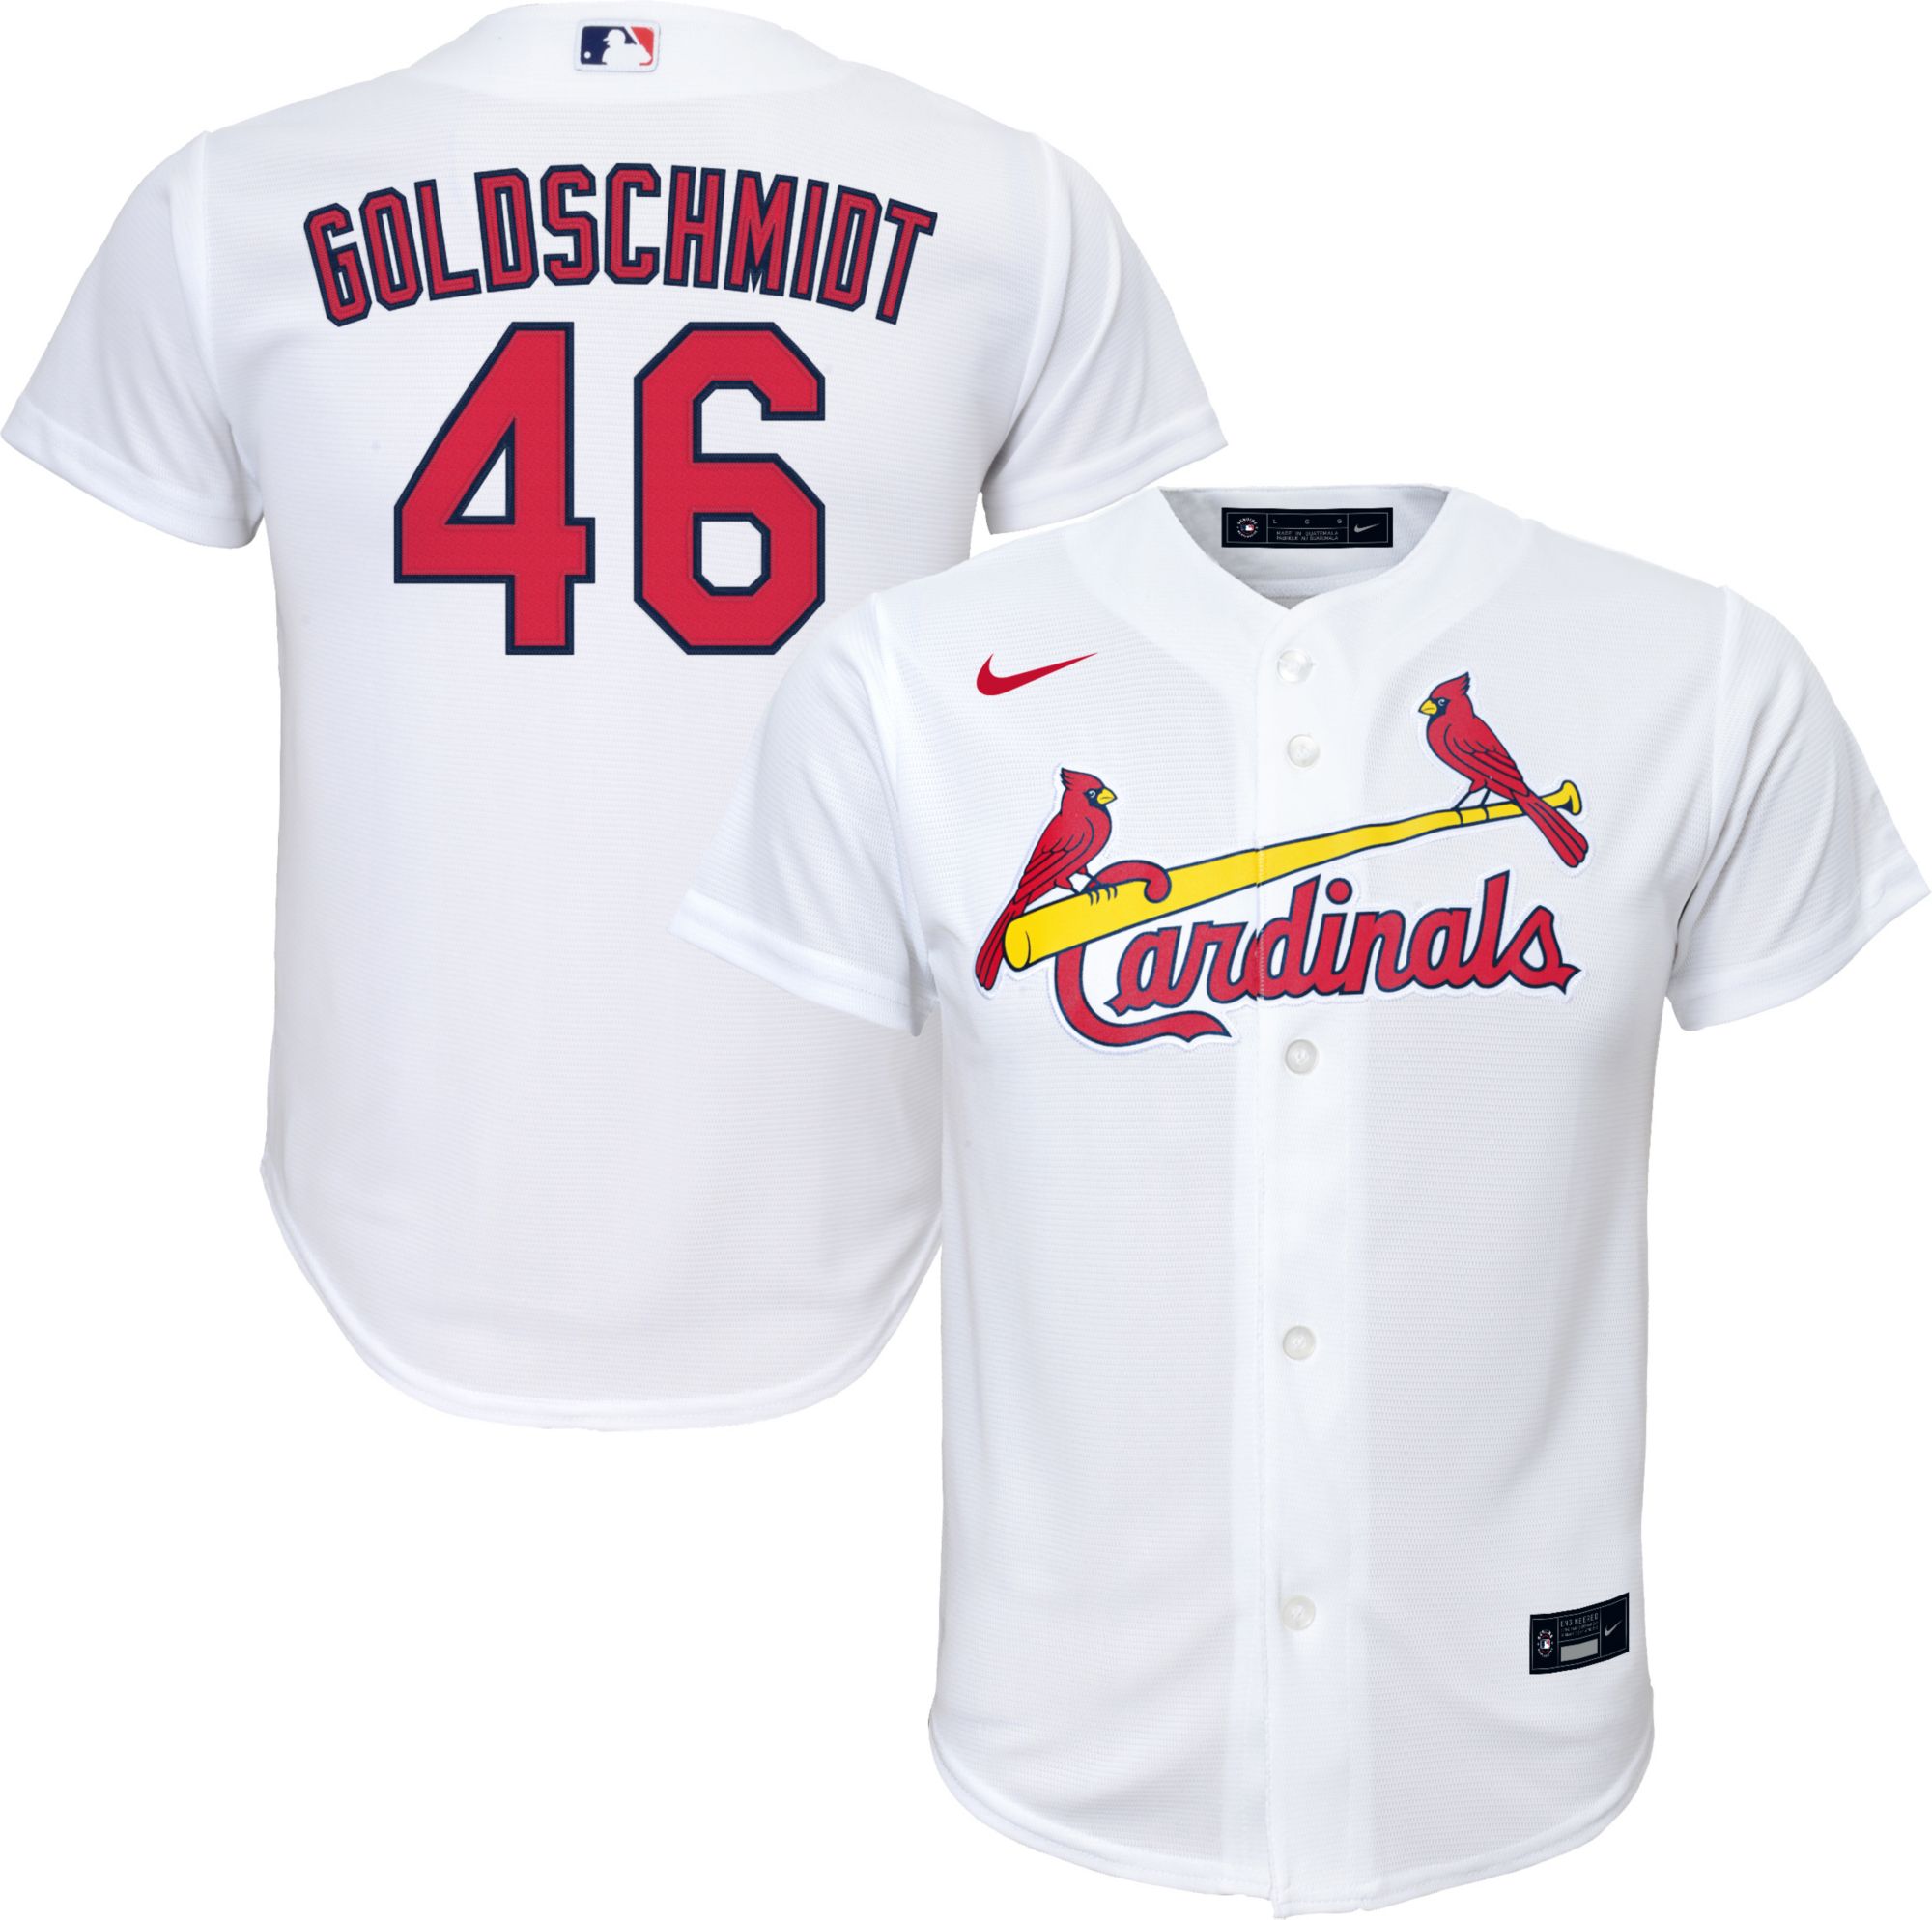 Nike / Youth Replica St. Louis Cardinals Paul Goldschmidt #46 Cool